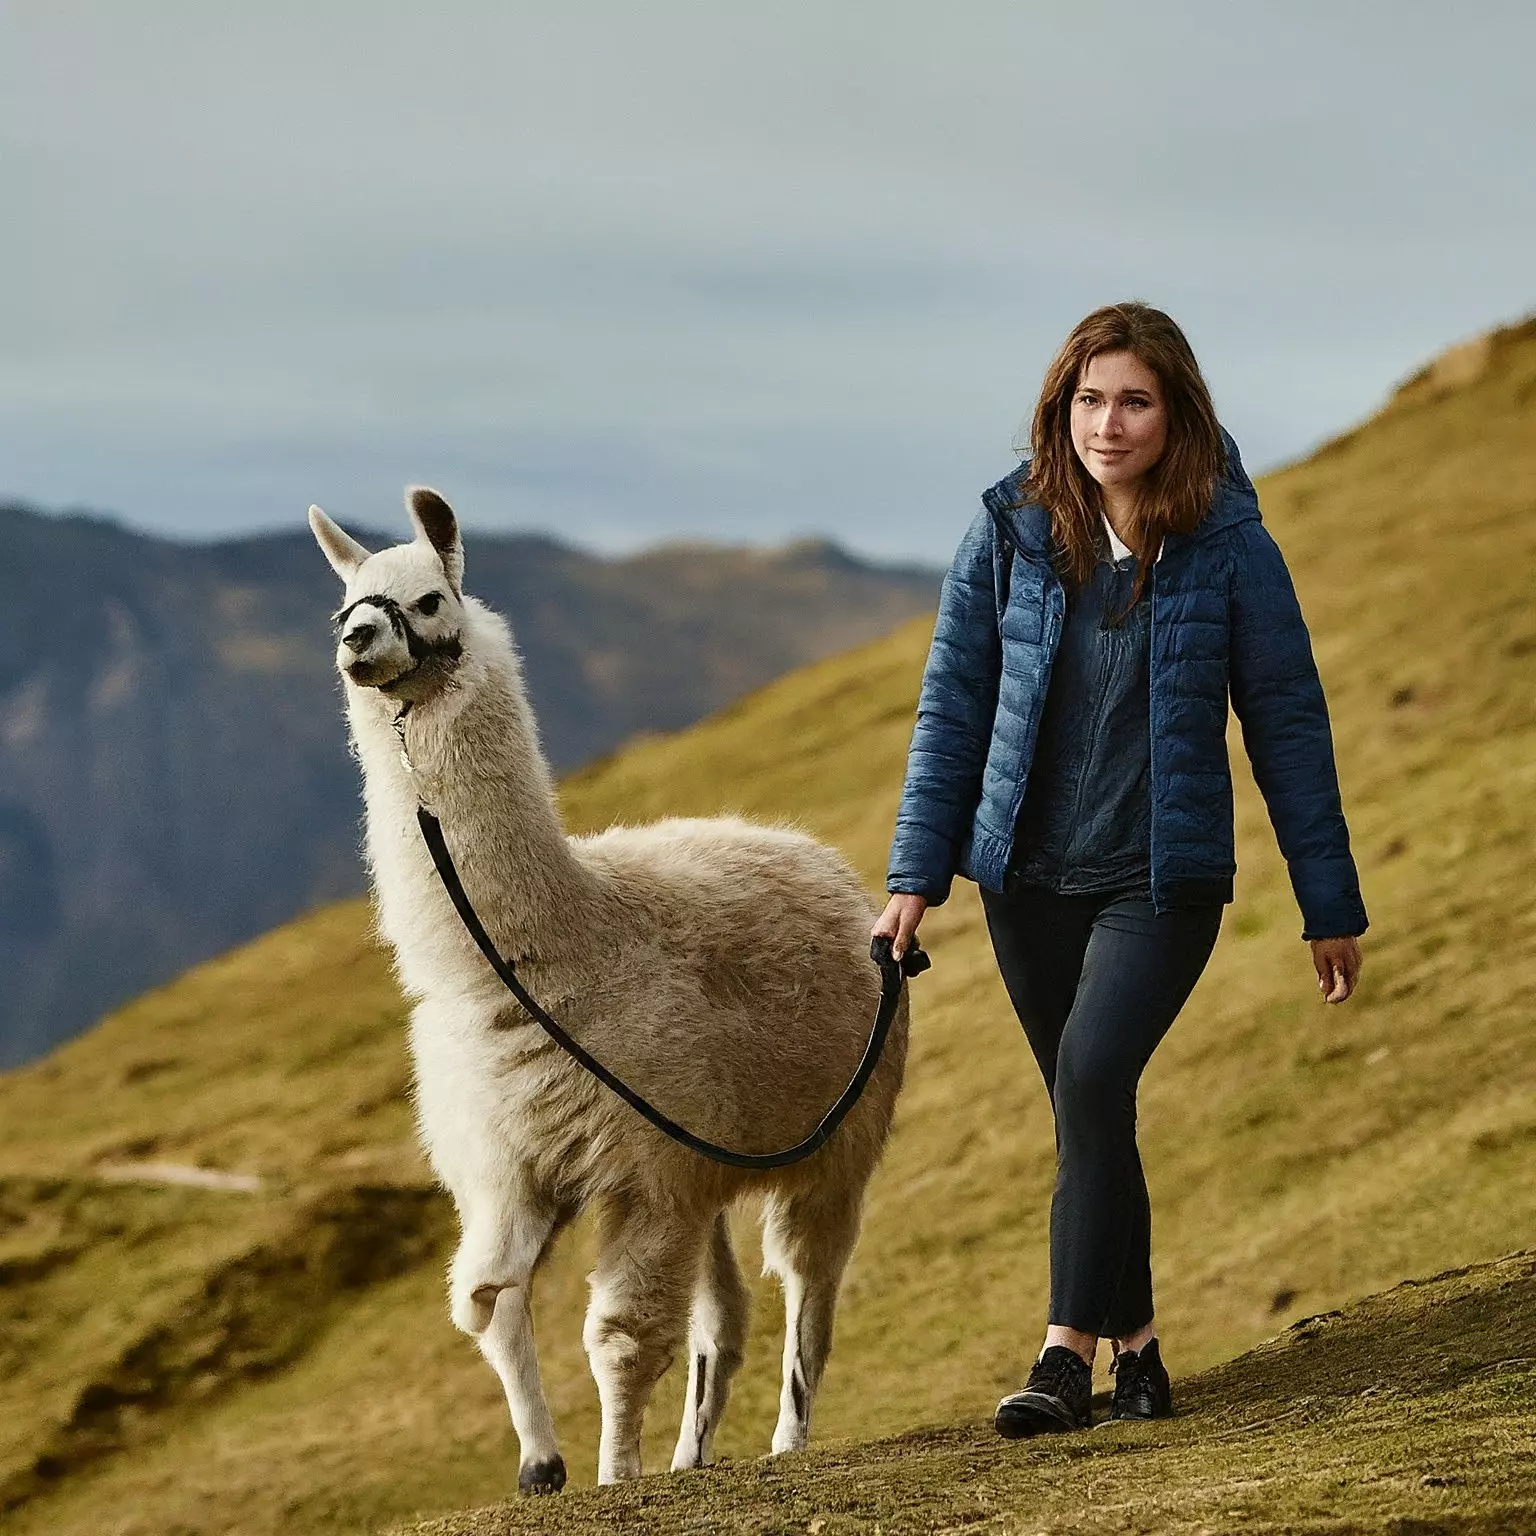 An image of a woman walking a llama on a mountain trail. [U]